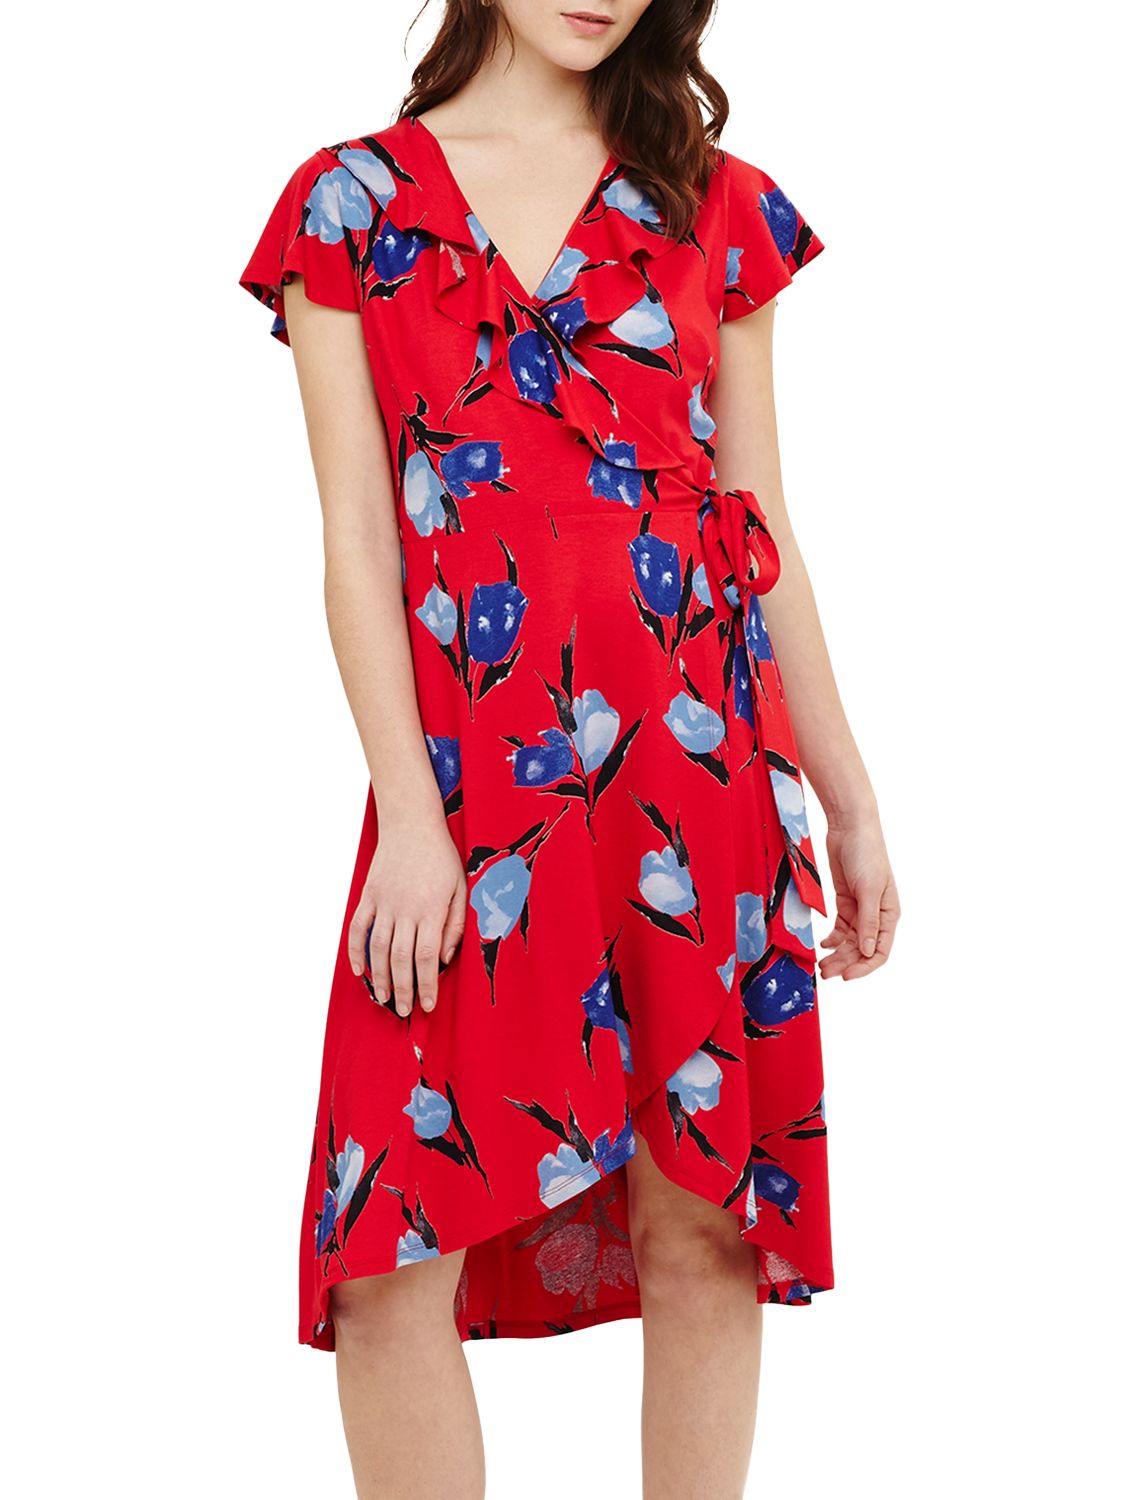 Phase Eight Idella Tulip Print Dress, Red/Multi